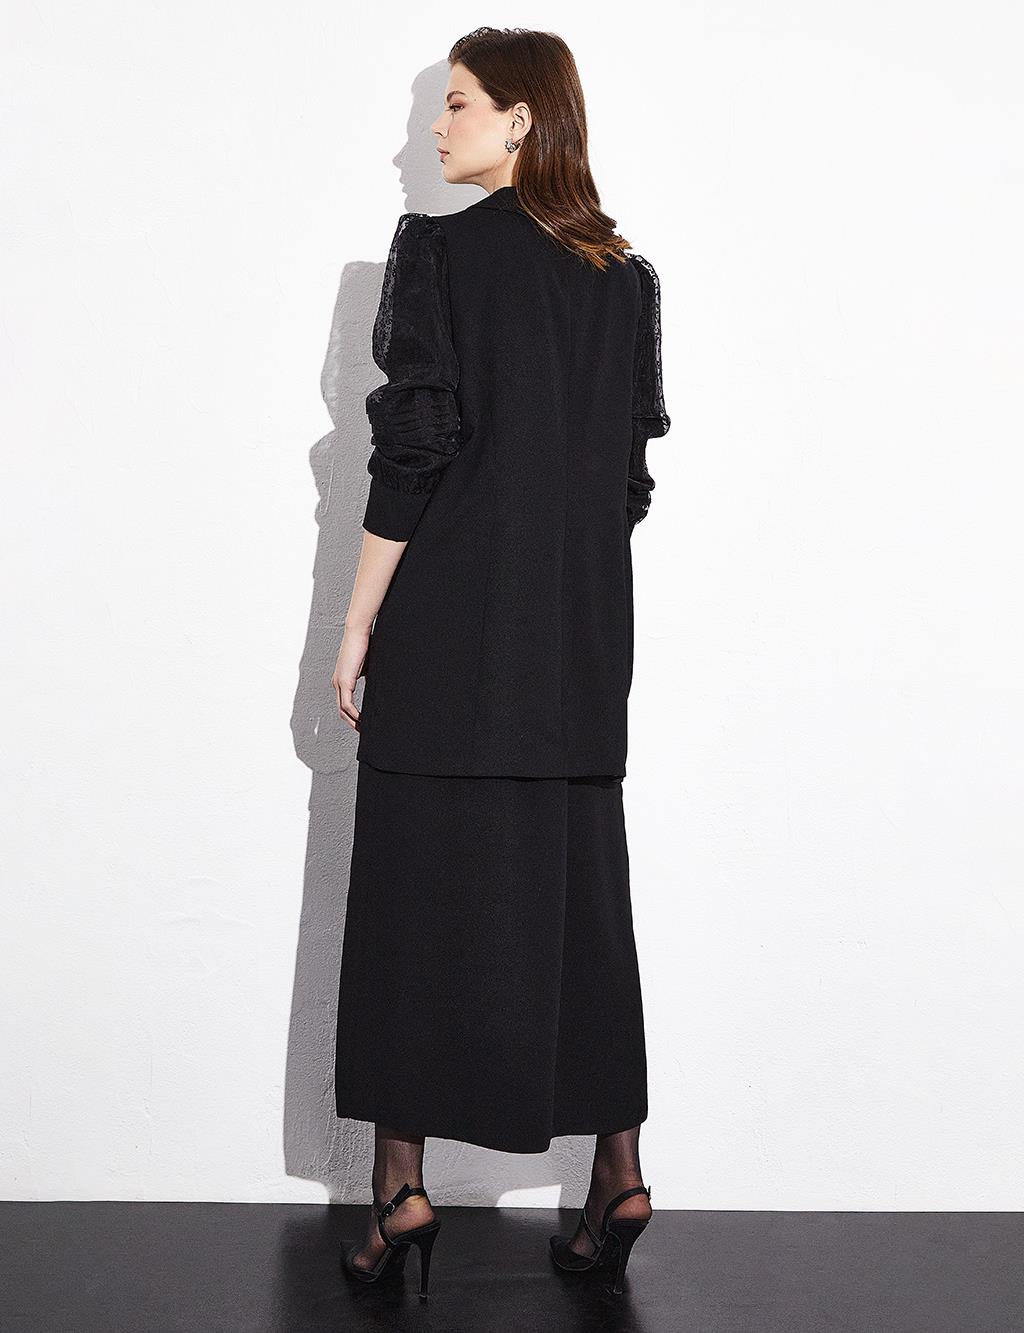 Organza Detailed Skirt Double Suit Black